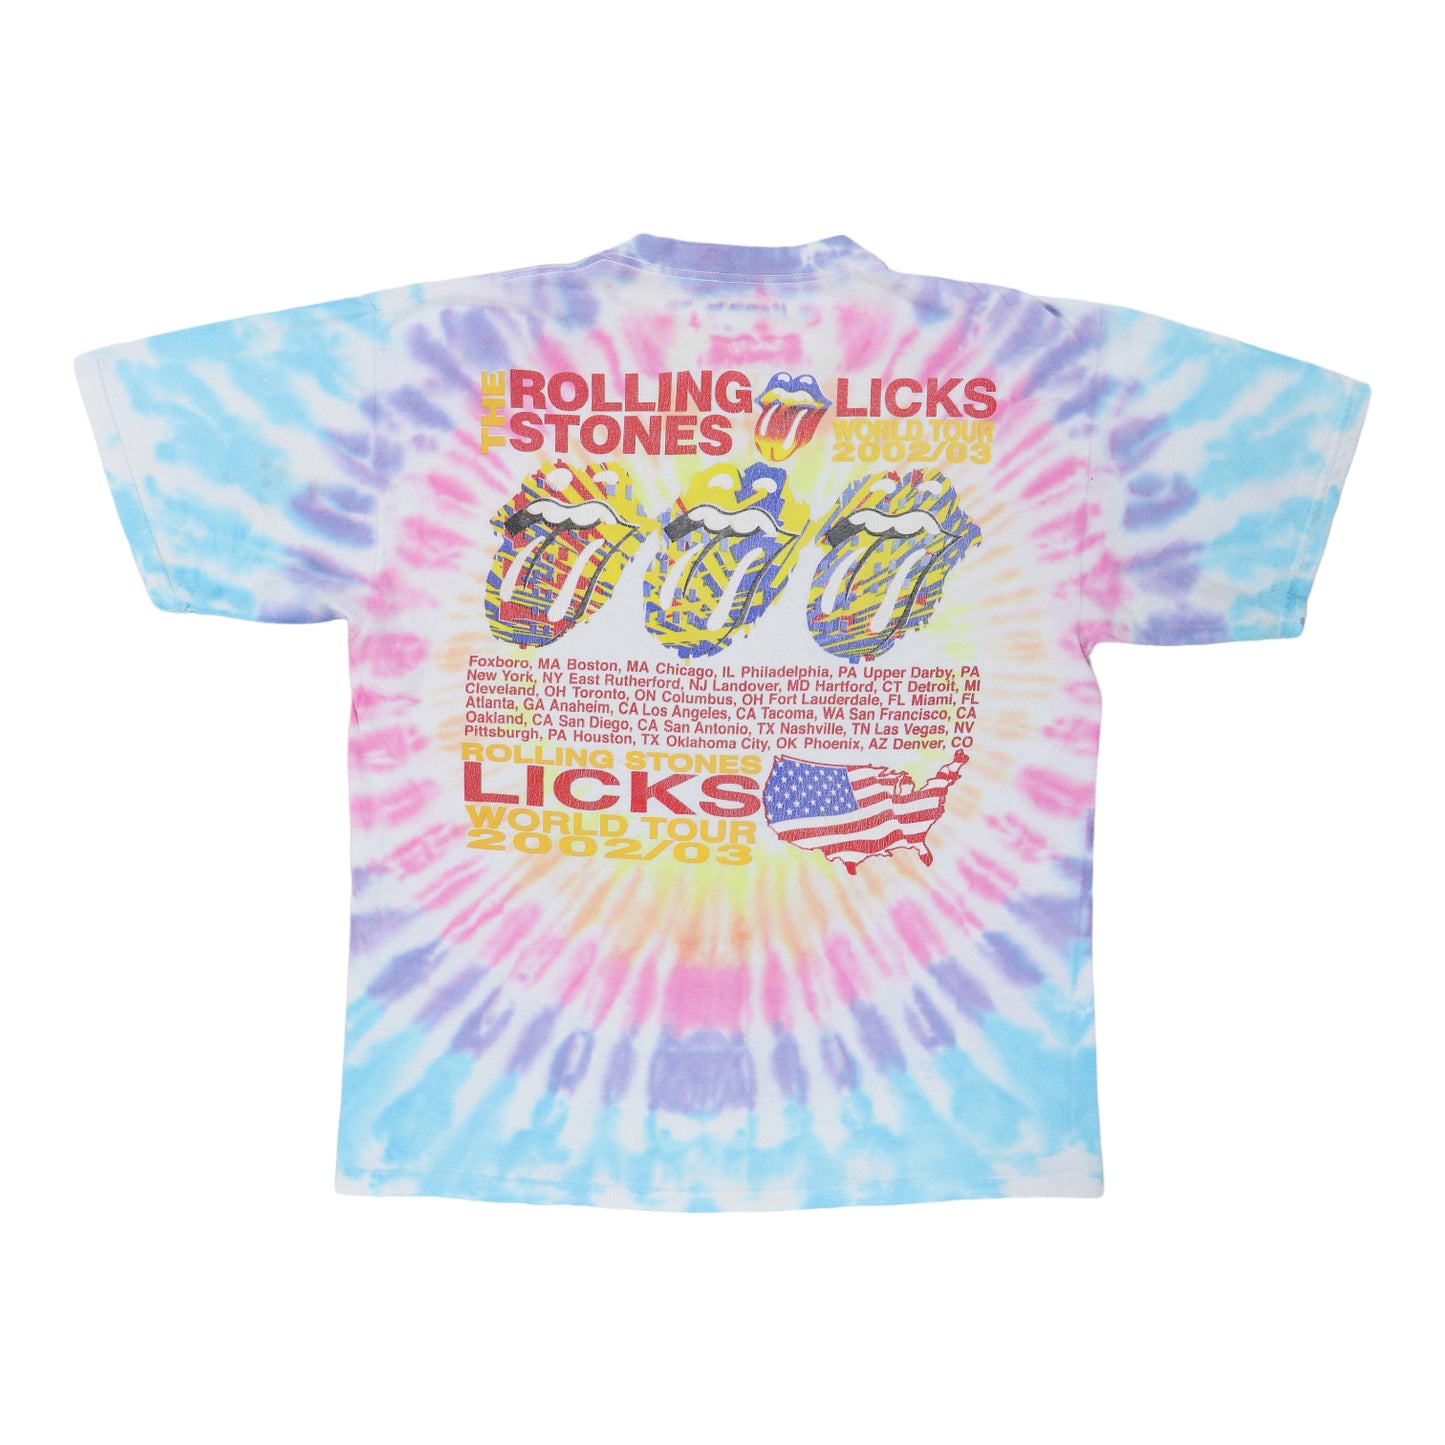 2003 Rolling Stones Licks World Tour Tie Dye Shirt